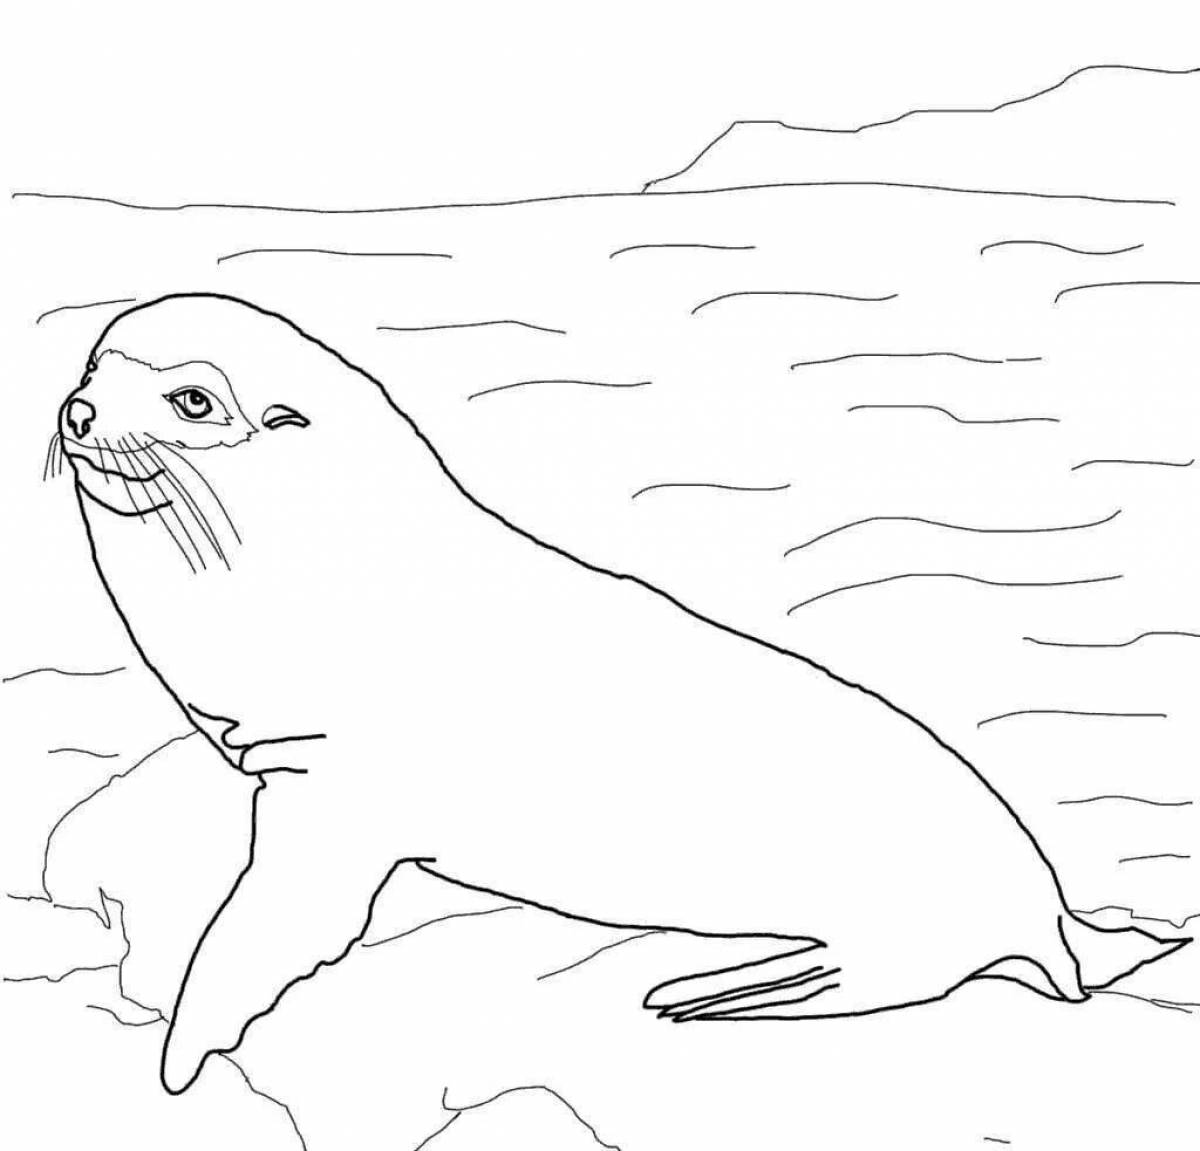 Colouring colorful Baikal seal